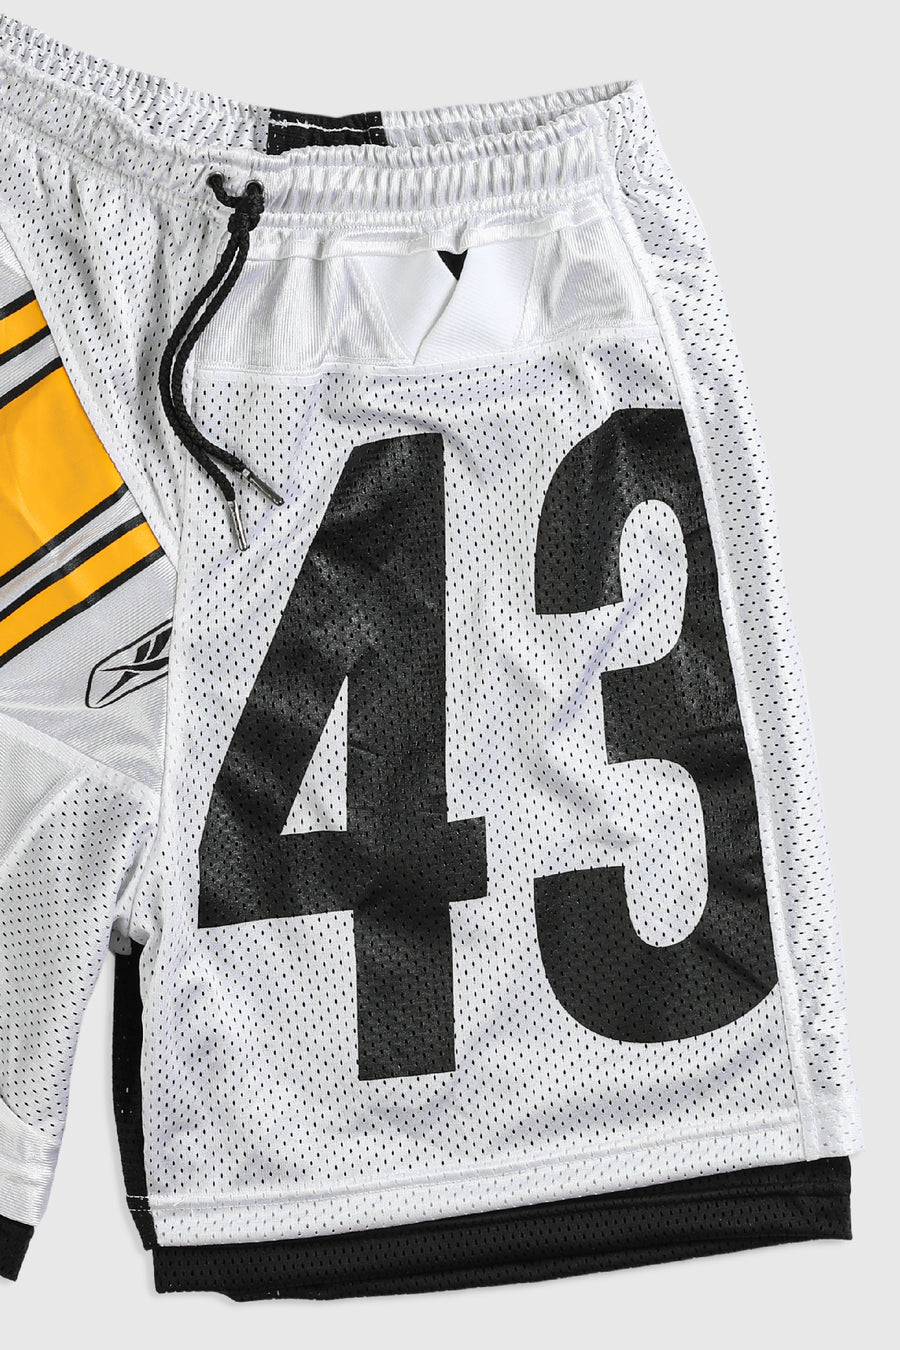 Unisex Rework Steelers NFL Jersey Shorts - M